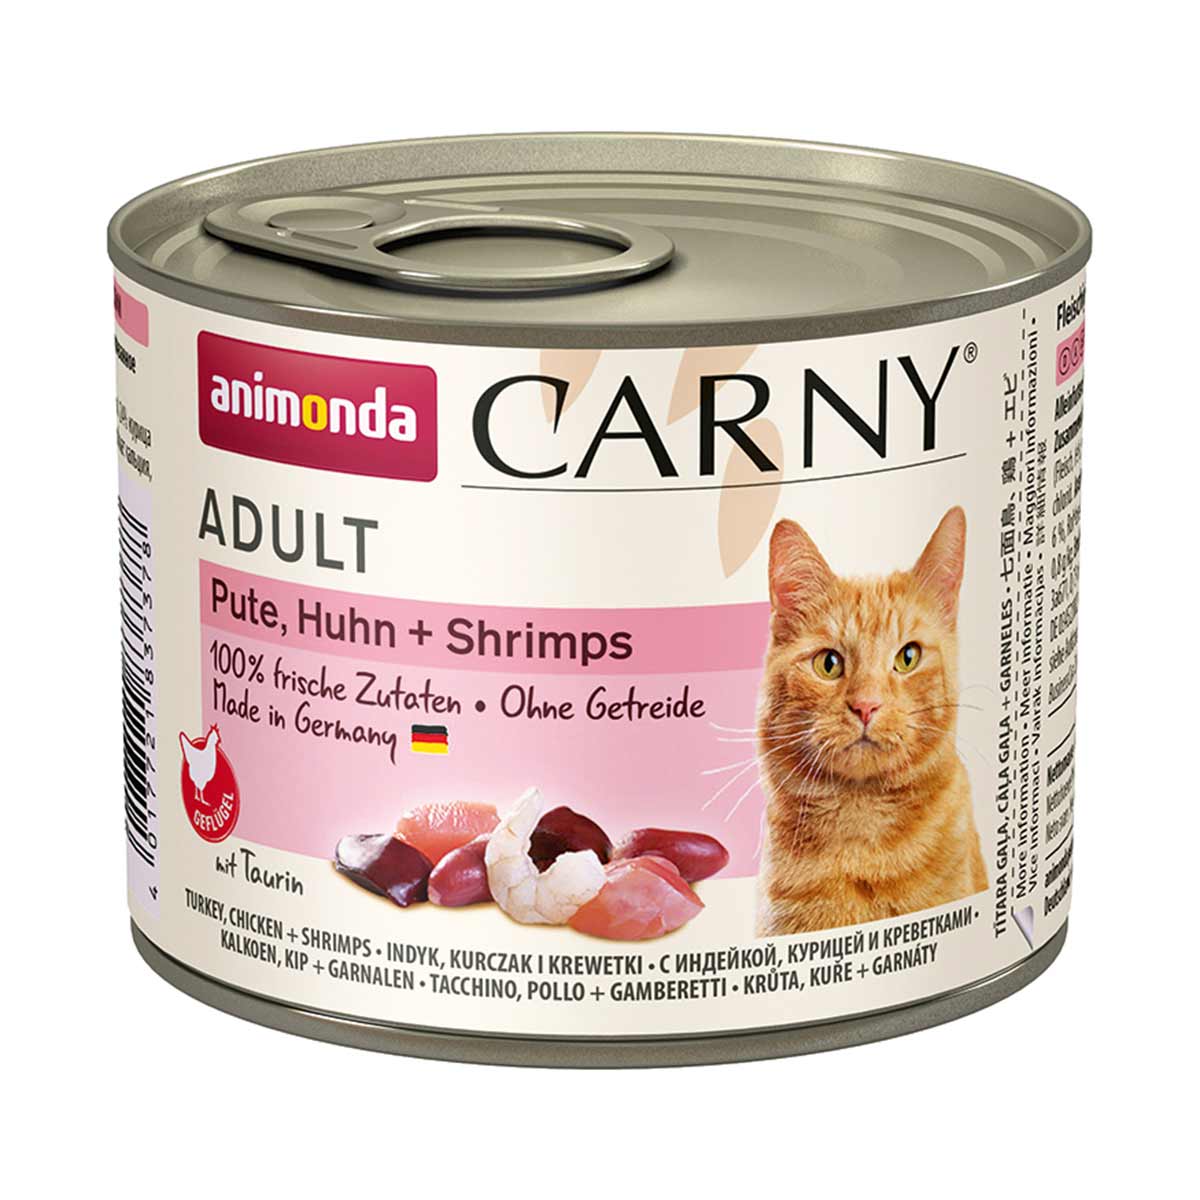 animonda Carny Adult Pute, Huhn und Shrimps 24x200g von animonda Carny